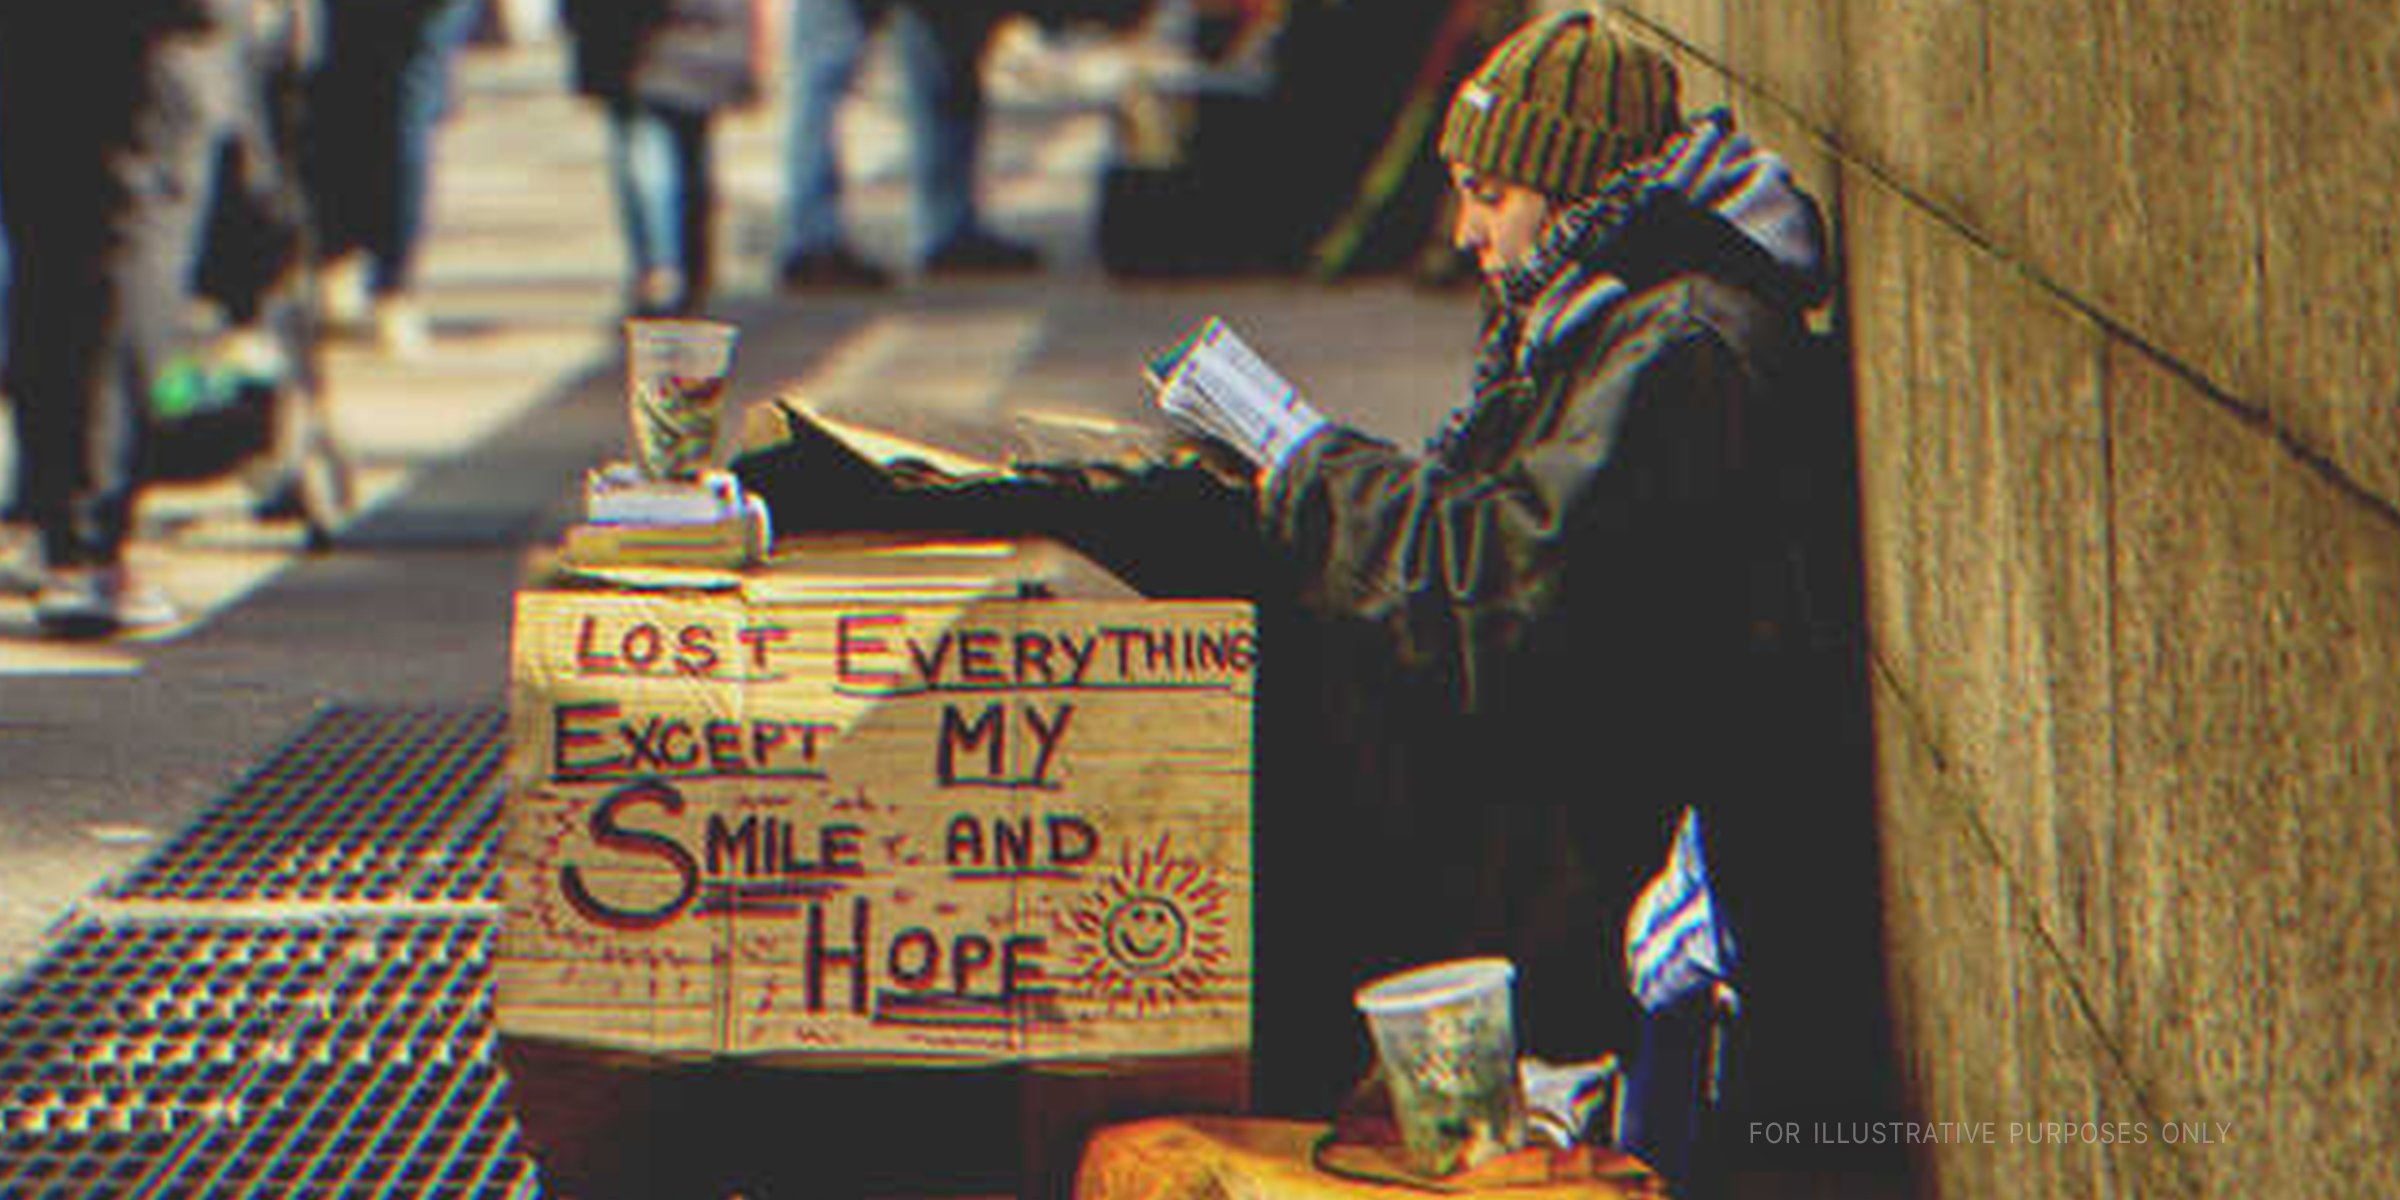 A homeless person | Source: Shutterstock